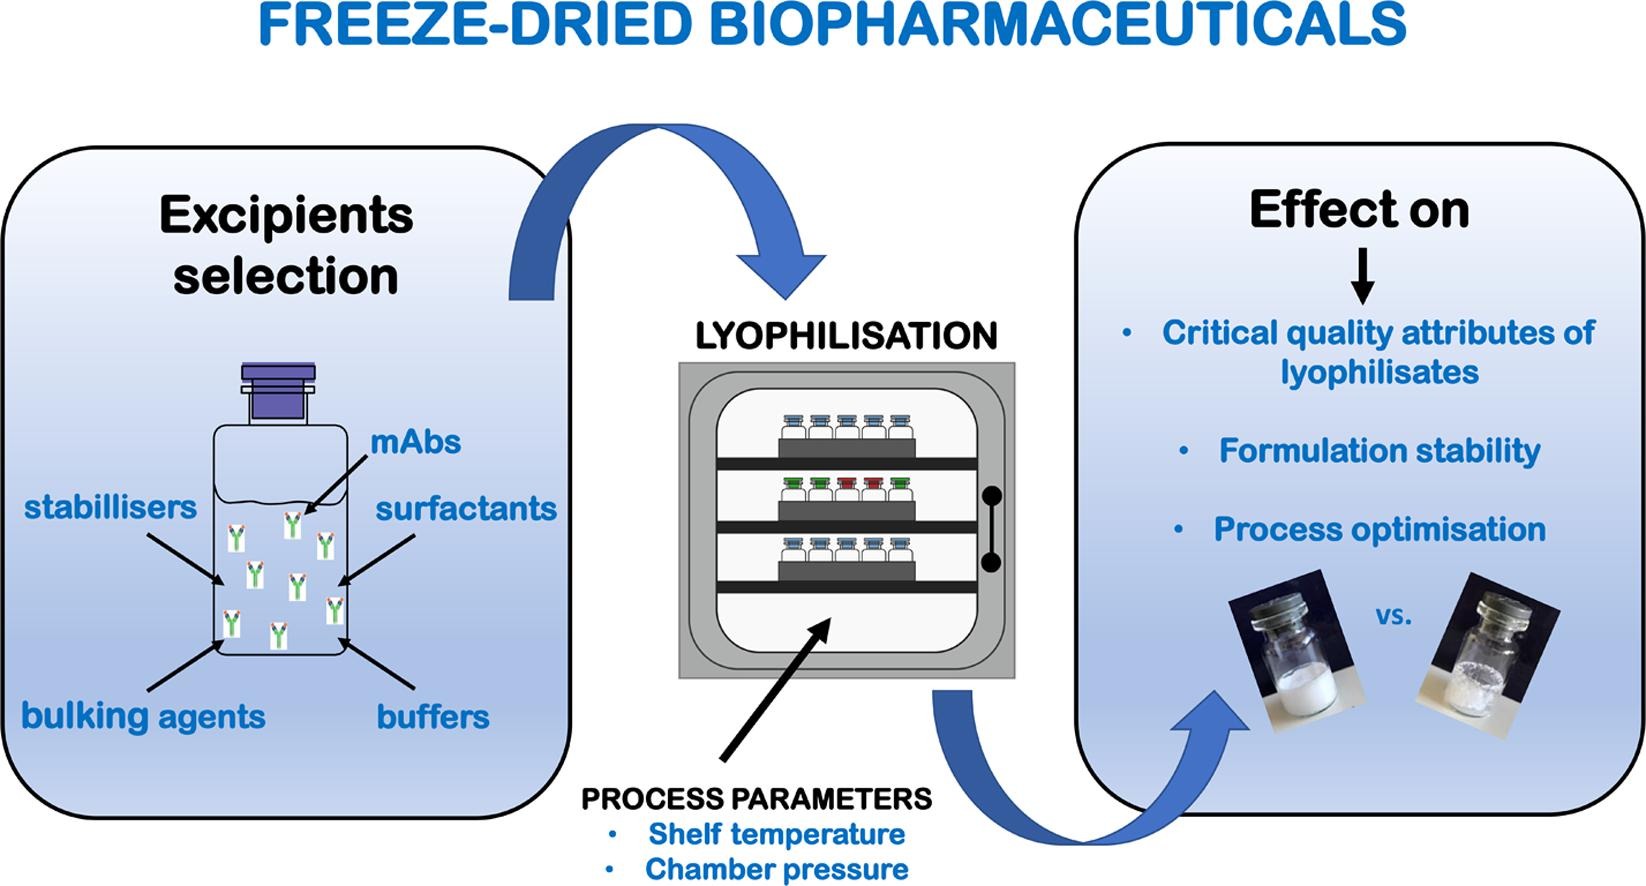 Excipients in freeze-dried biopharmaceuticals